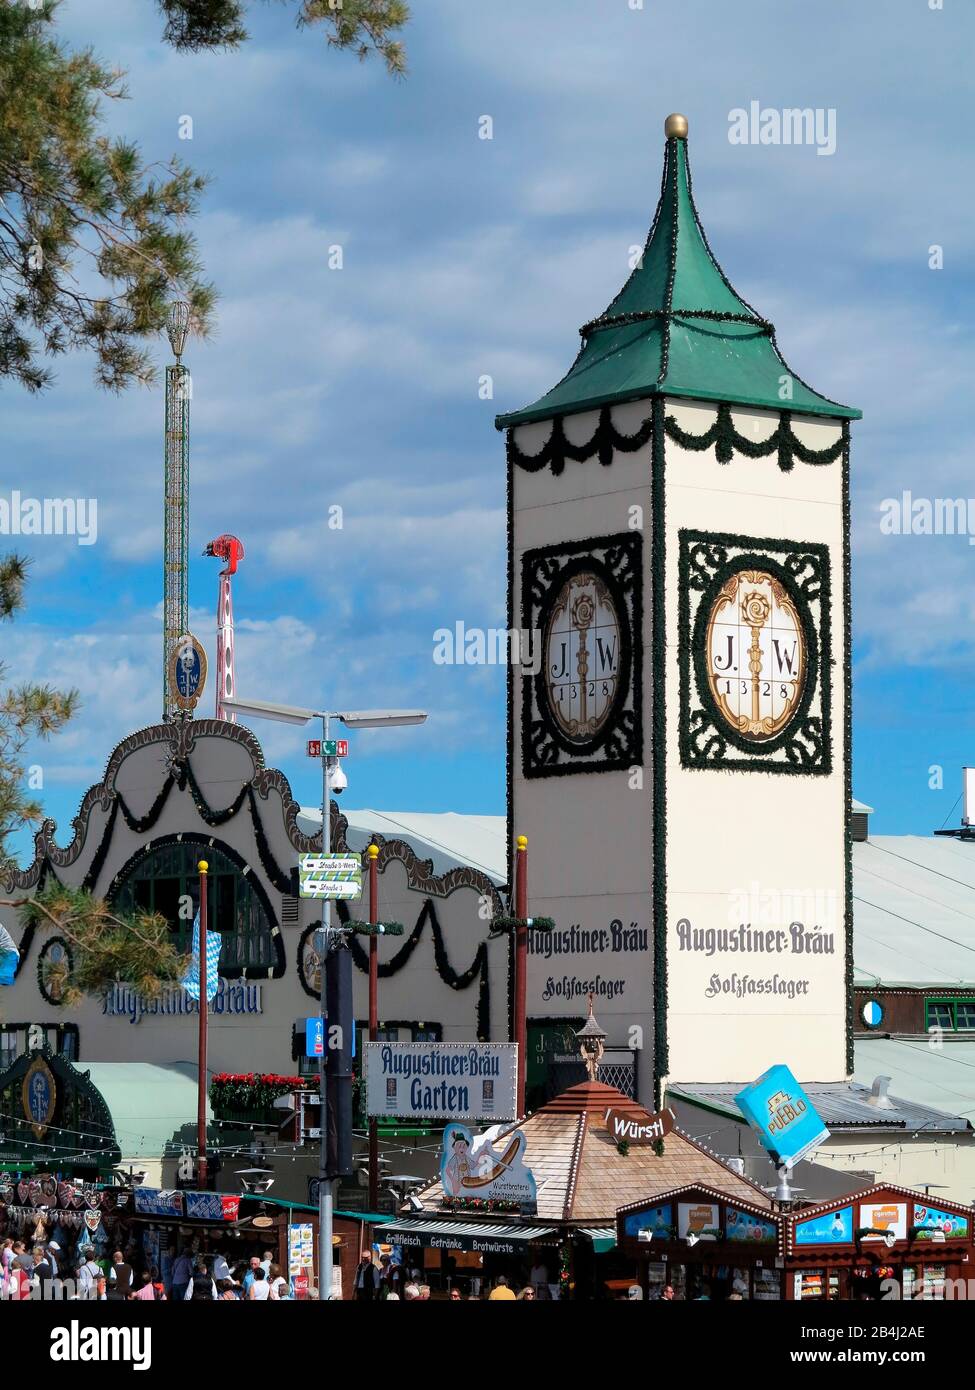 Germany, Bavaria, Munich, Oktoberfest, Augustiner Bräu, beer tower and marquee Stock Photo